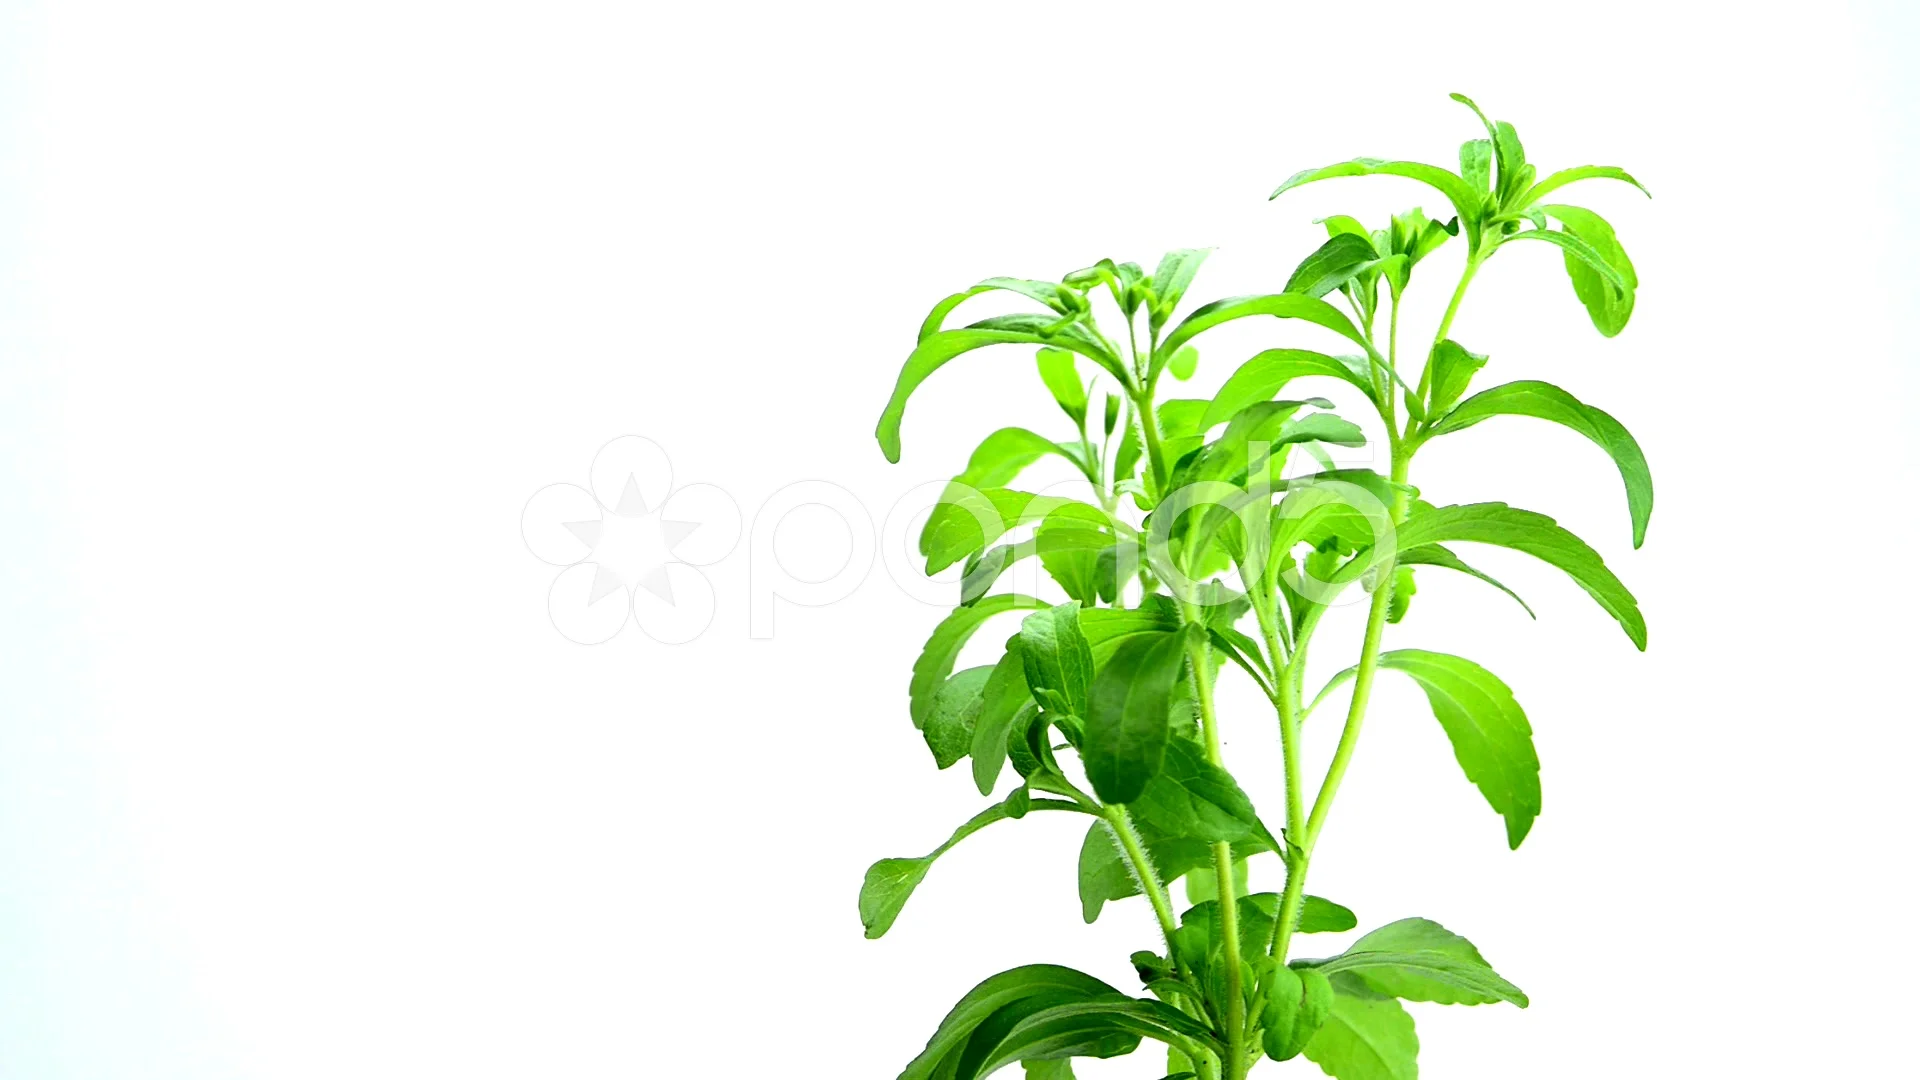 HD wallpaper green leafed plant on white background Stevia Herbs  Sweetener  Wallpaper Flare